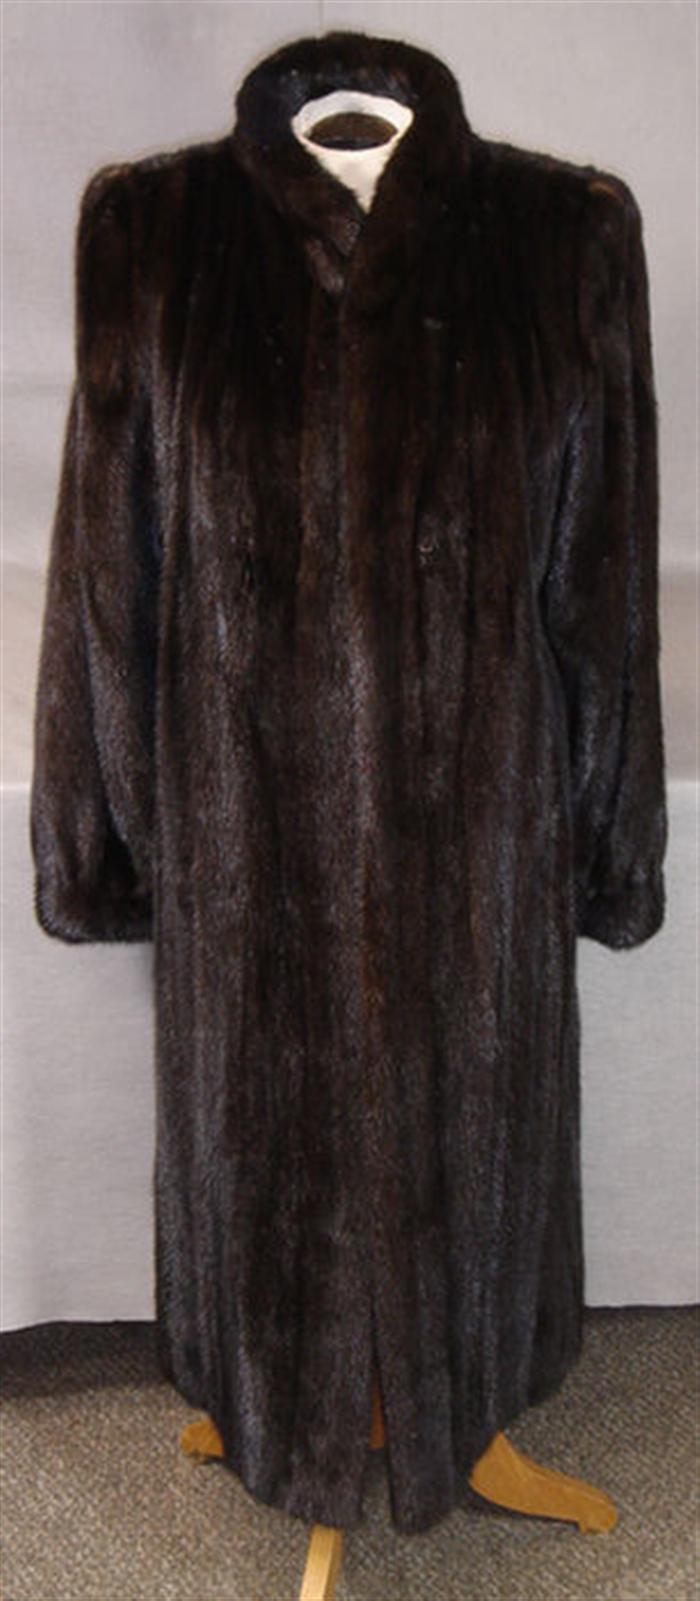 Black full length fur coat, about size